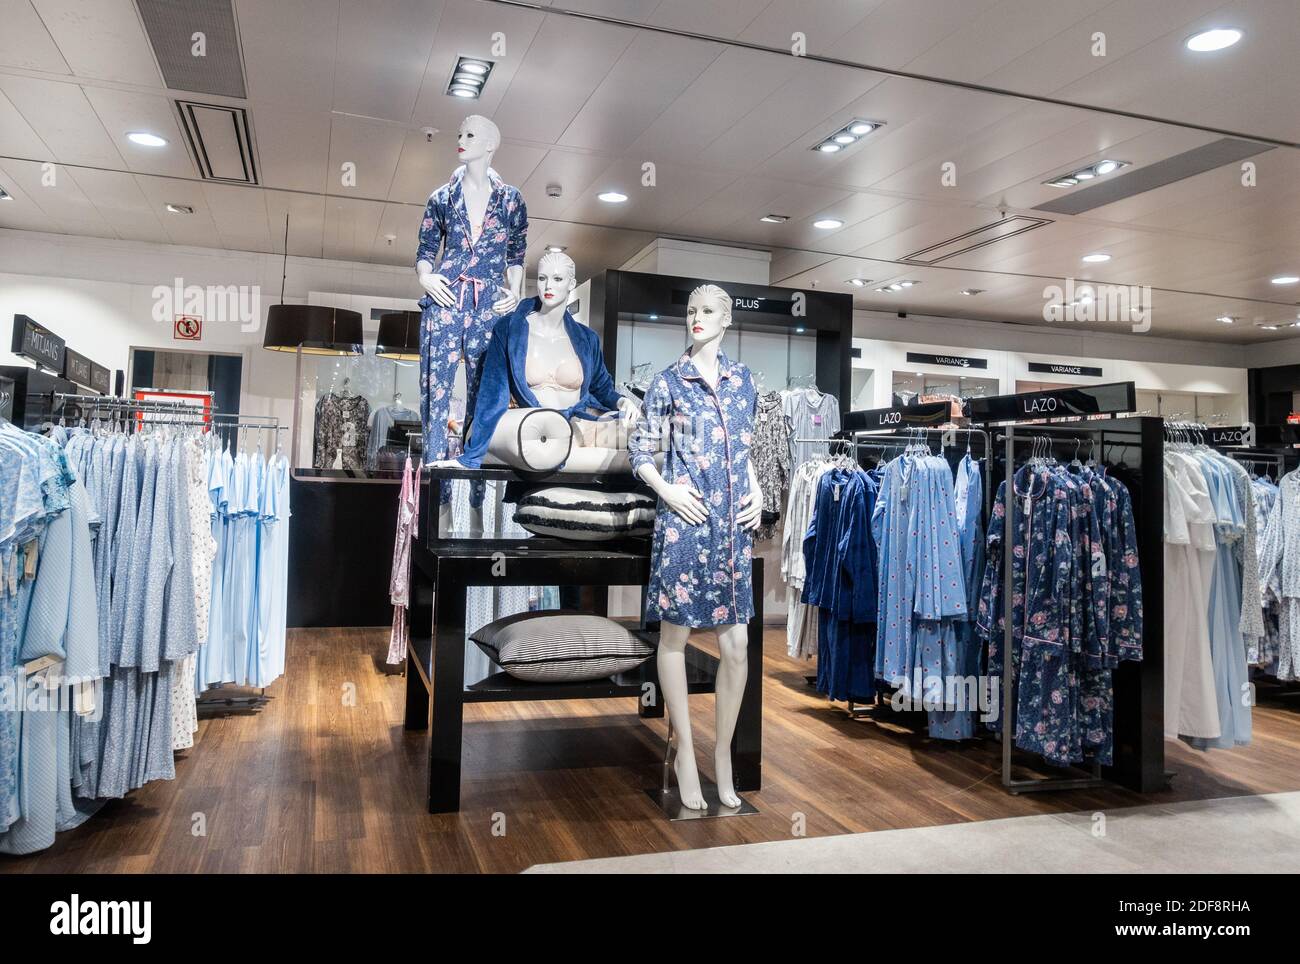 Pyjamas display in women's clothing store. Stock Photo